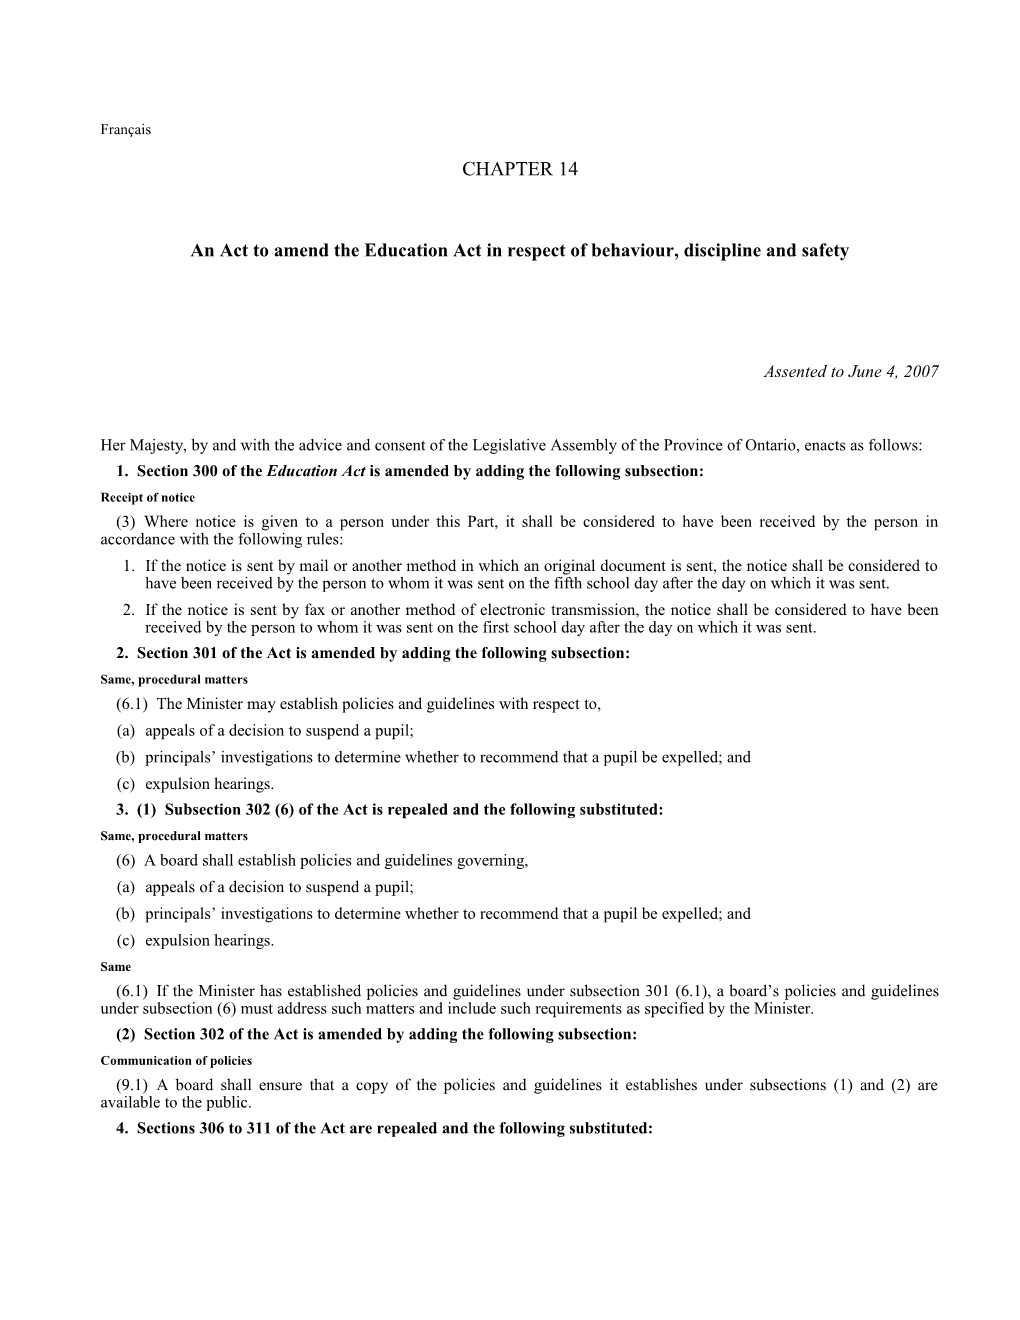 Education Amendment Act (Progressive Discipline and School Safety), 2007, S.O. 2007, C